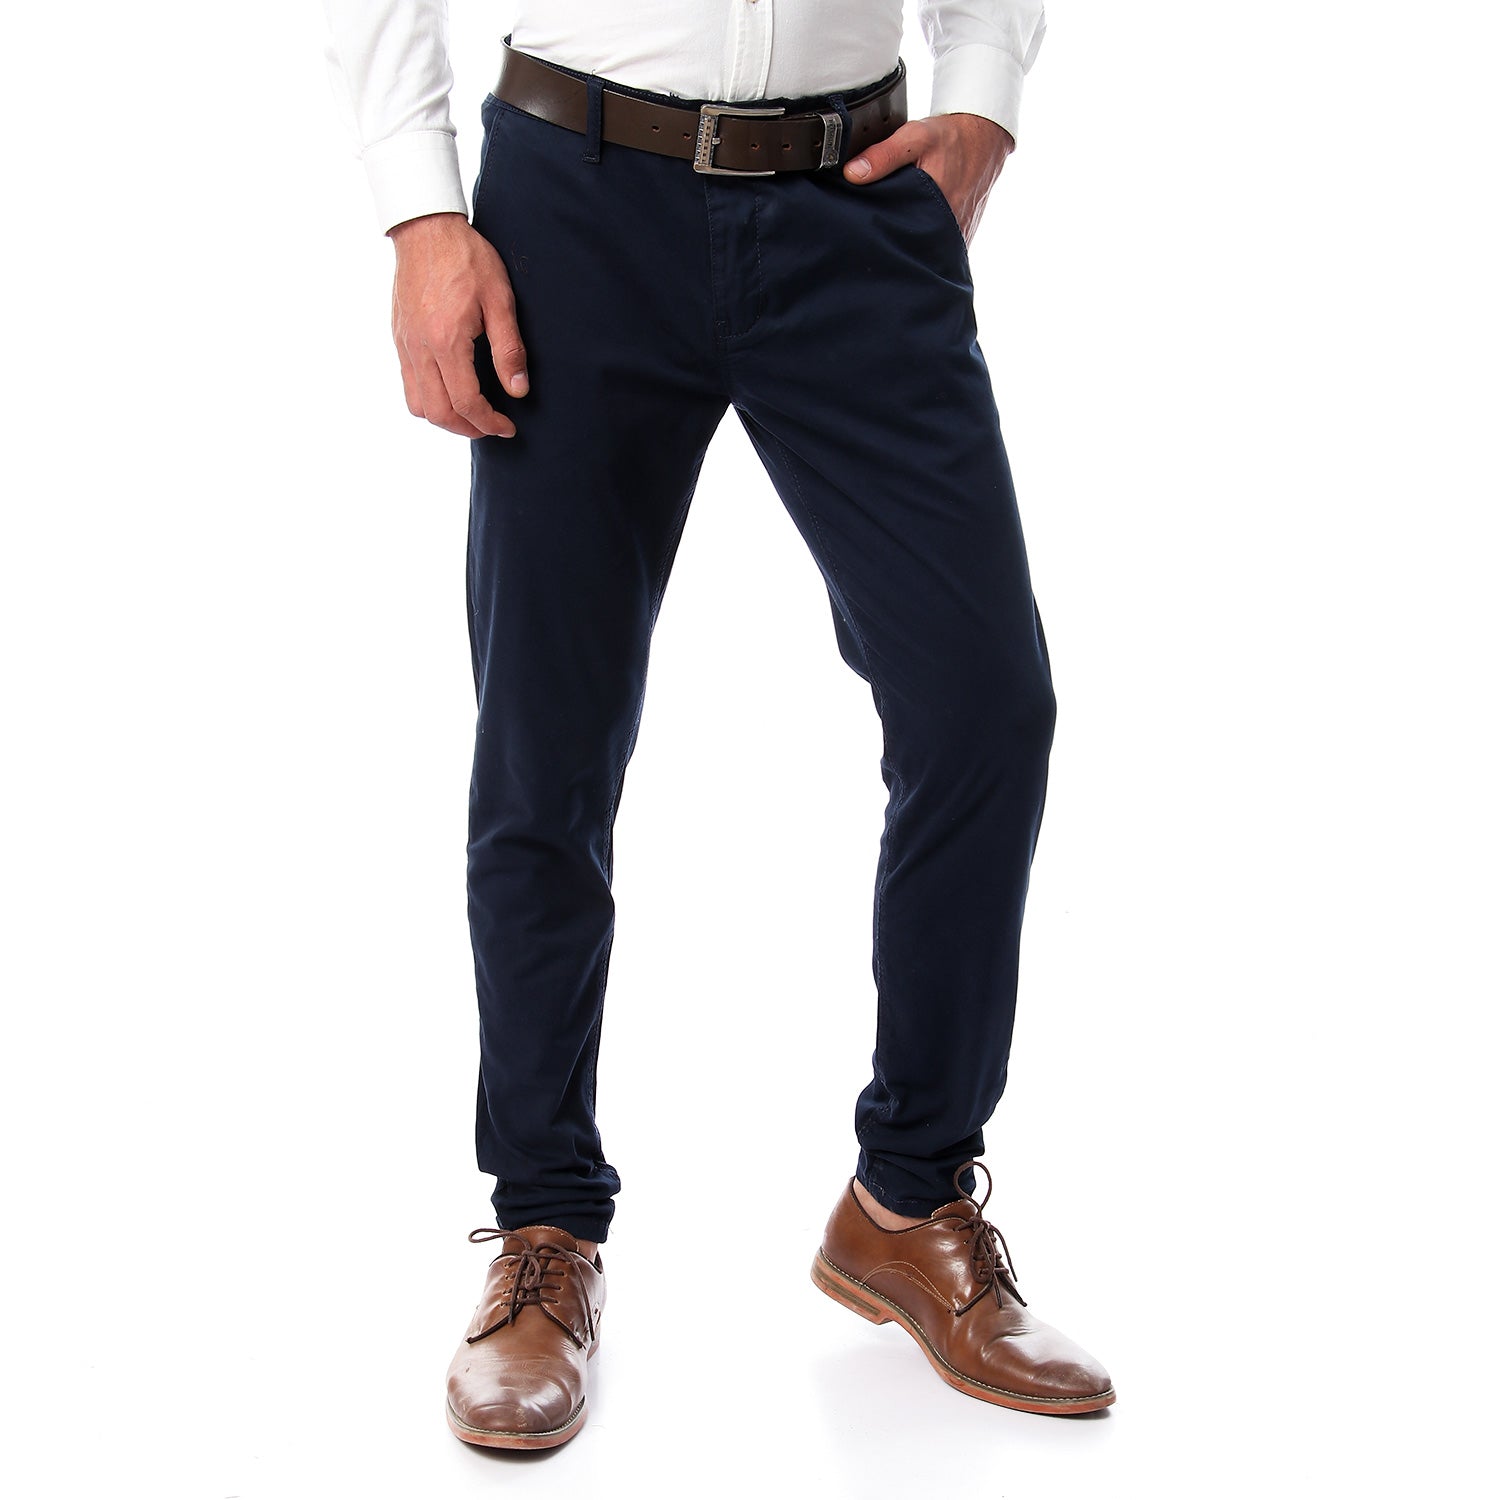 Chino Basic Pants For Men -110501001